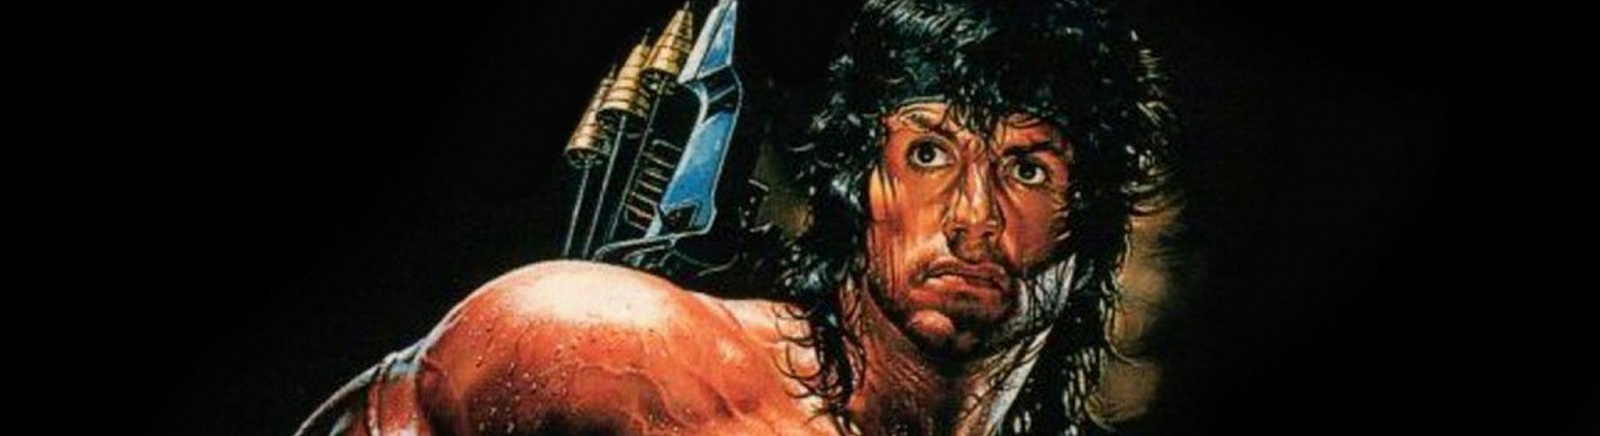 Дата выхода Rambo 3 (1989)  на Commodore 64, ZX Spectrum и Amiga в России и во всем мире